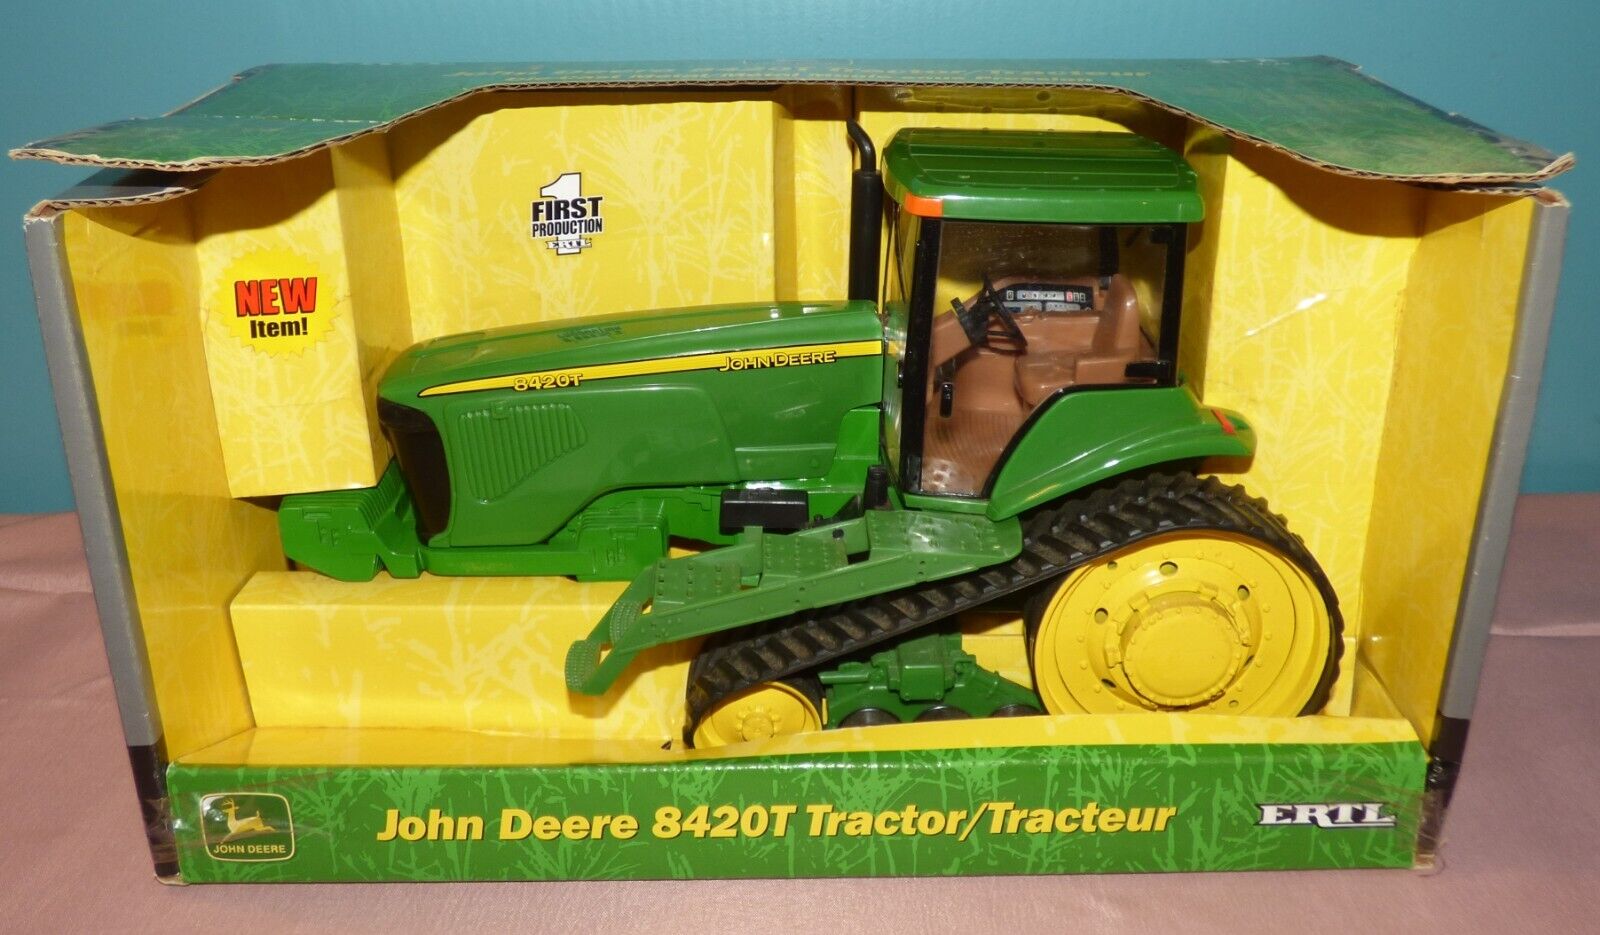 2002 Ertl John Deere 8420T Tractor 1/16  1st Production No. 15207 New in Box